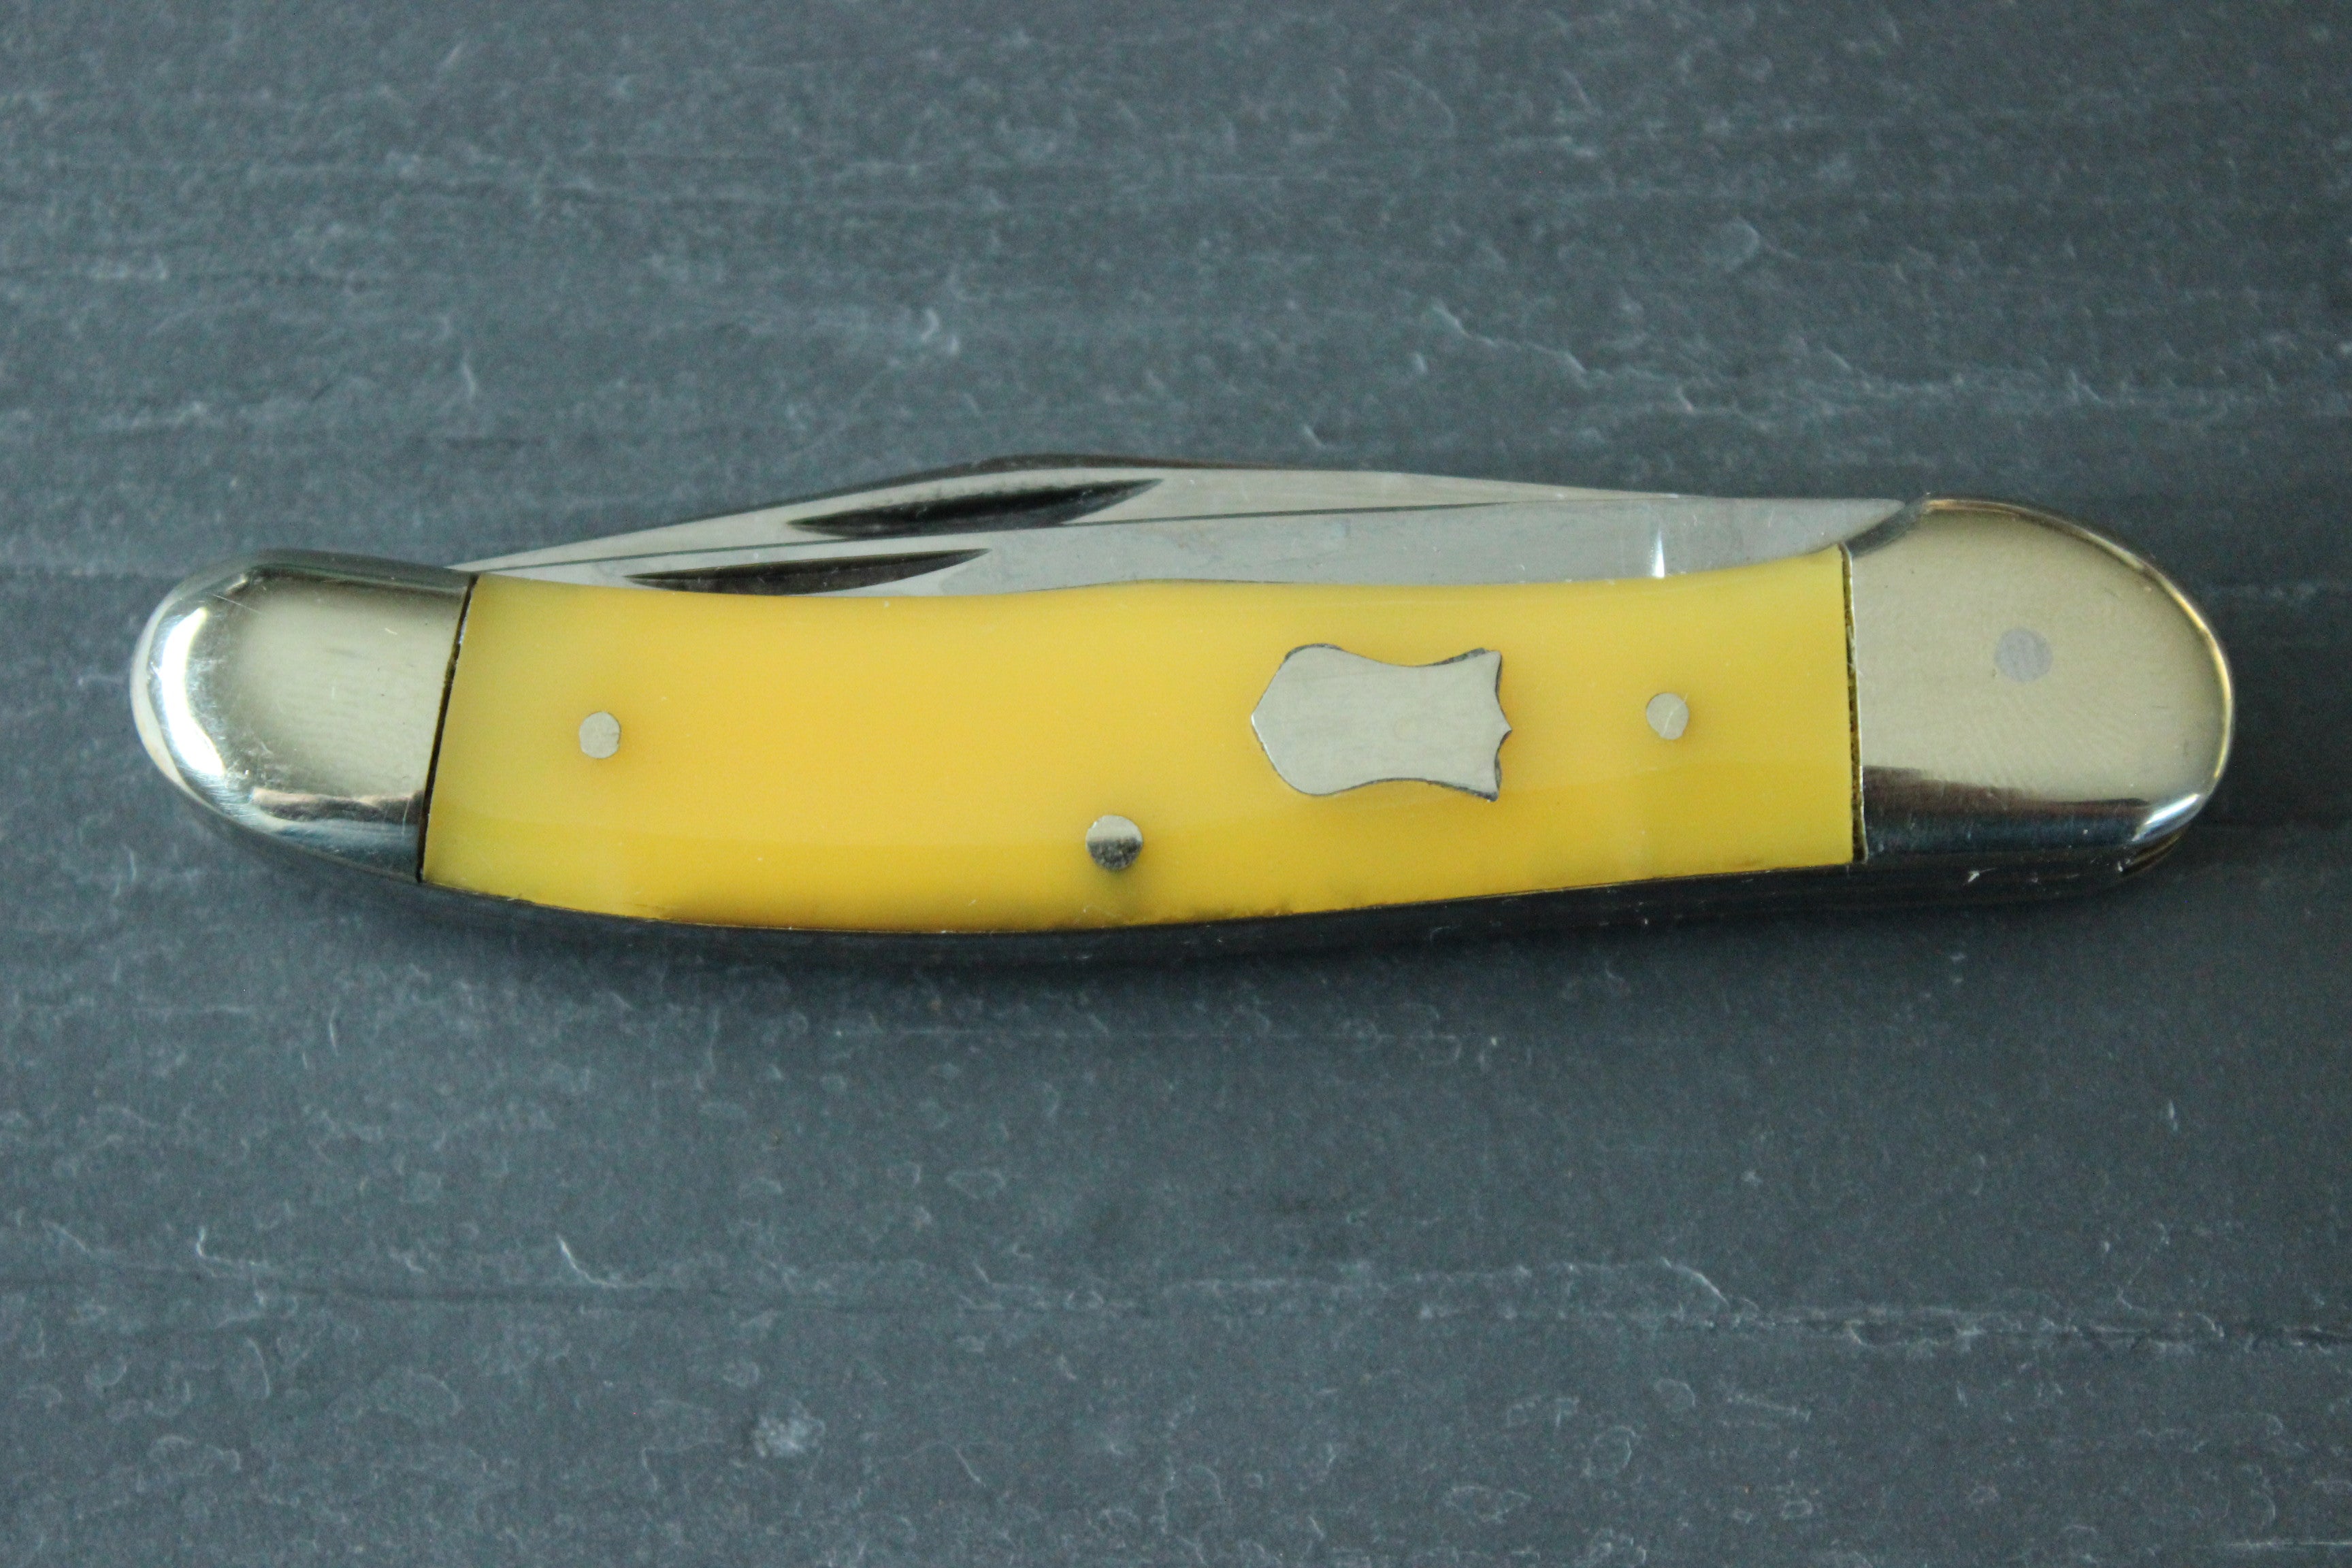 Eye Brand Clodbuster Lockback yellow handle (GE99YL)